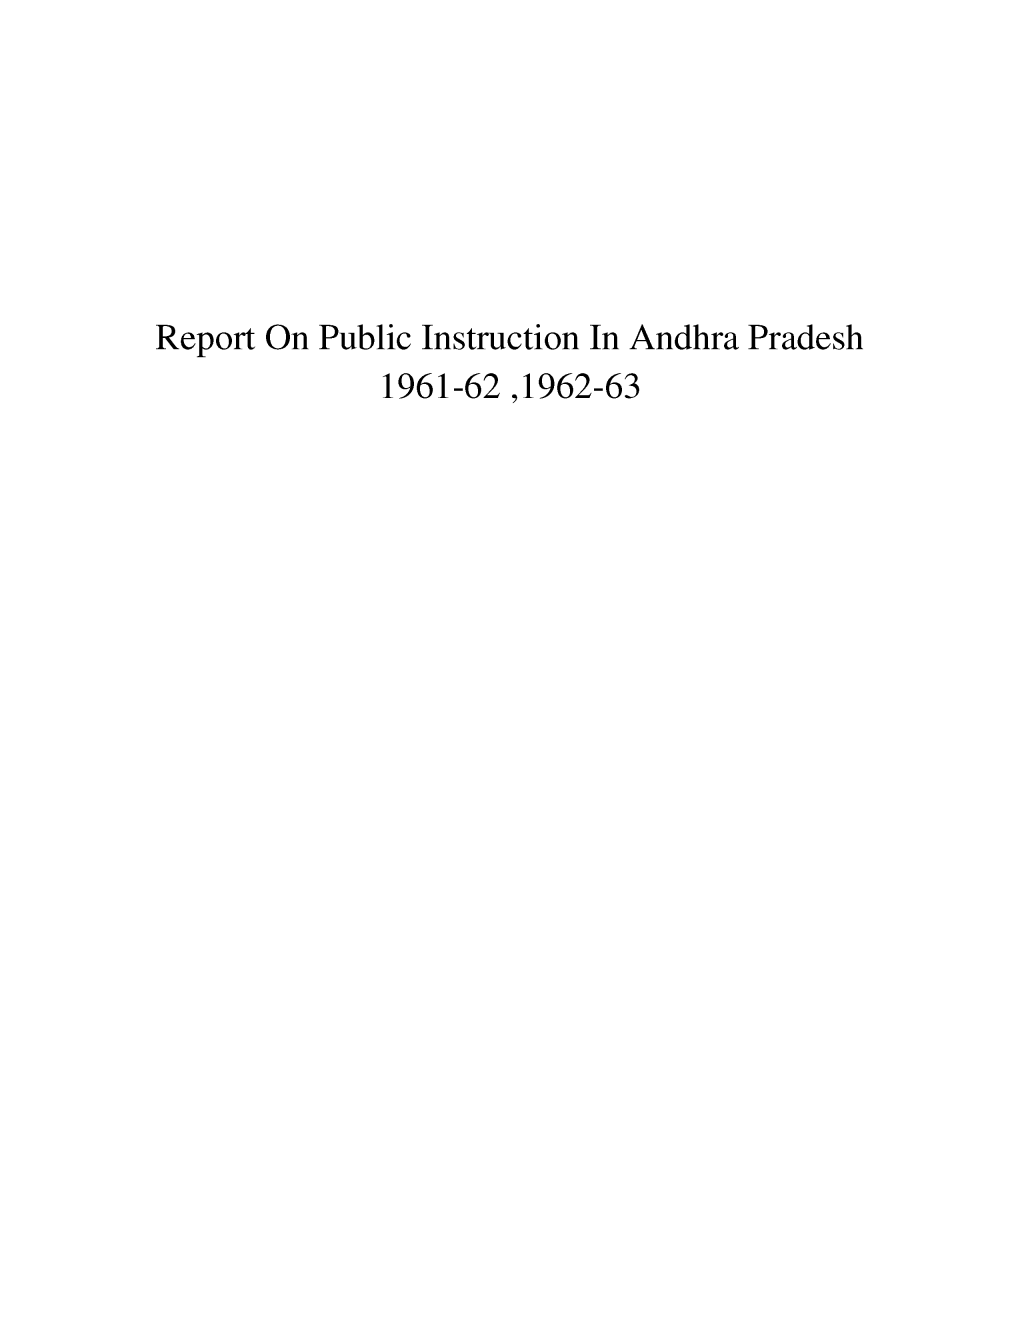 Report on Public Instruction in Andhra Pradesh 1961-62 ,1962-63 'Jltfci^T Ohi Jnisj/^Oc7/6Ay 2L^ Fimhr.1^